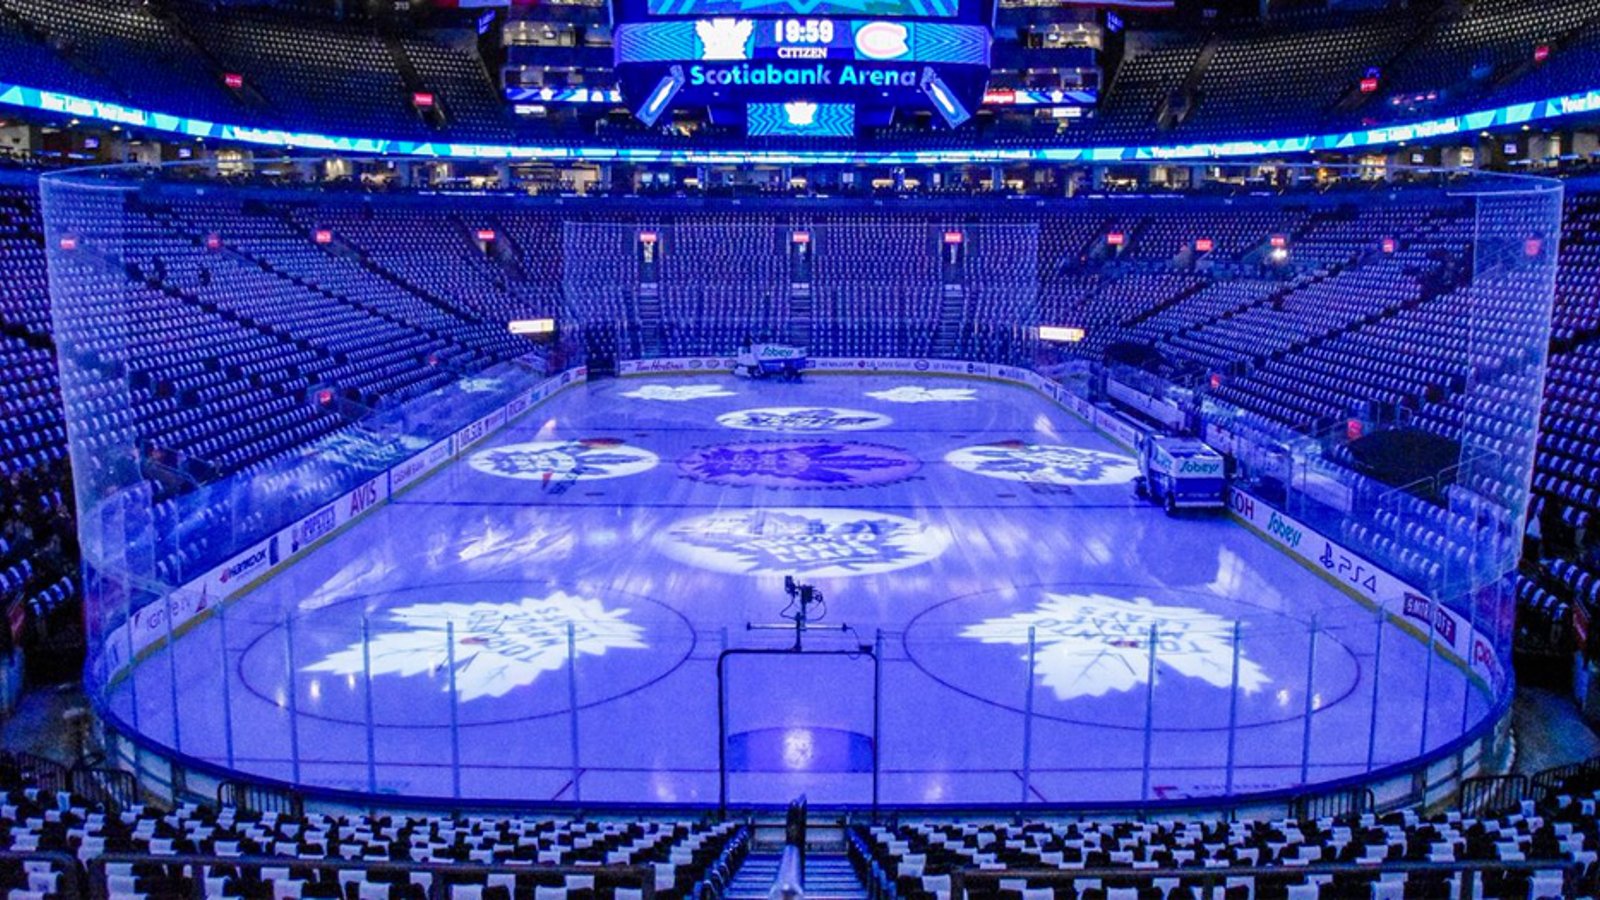 Toronto reportedly chosen as NHL’s second “hub city”